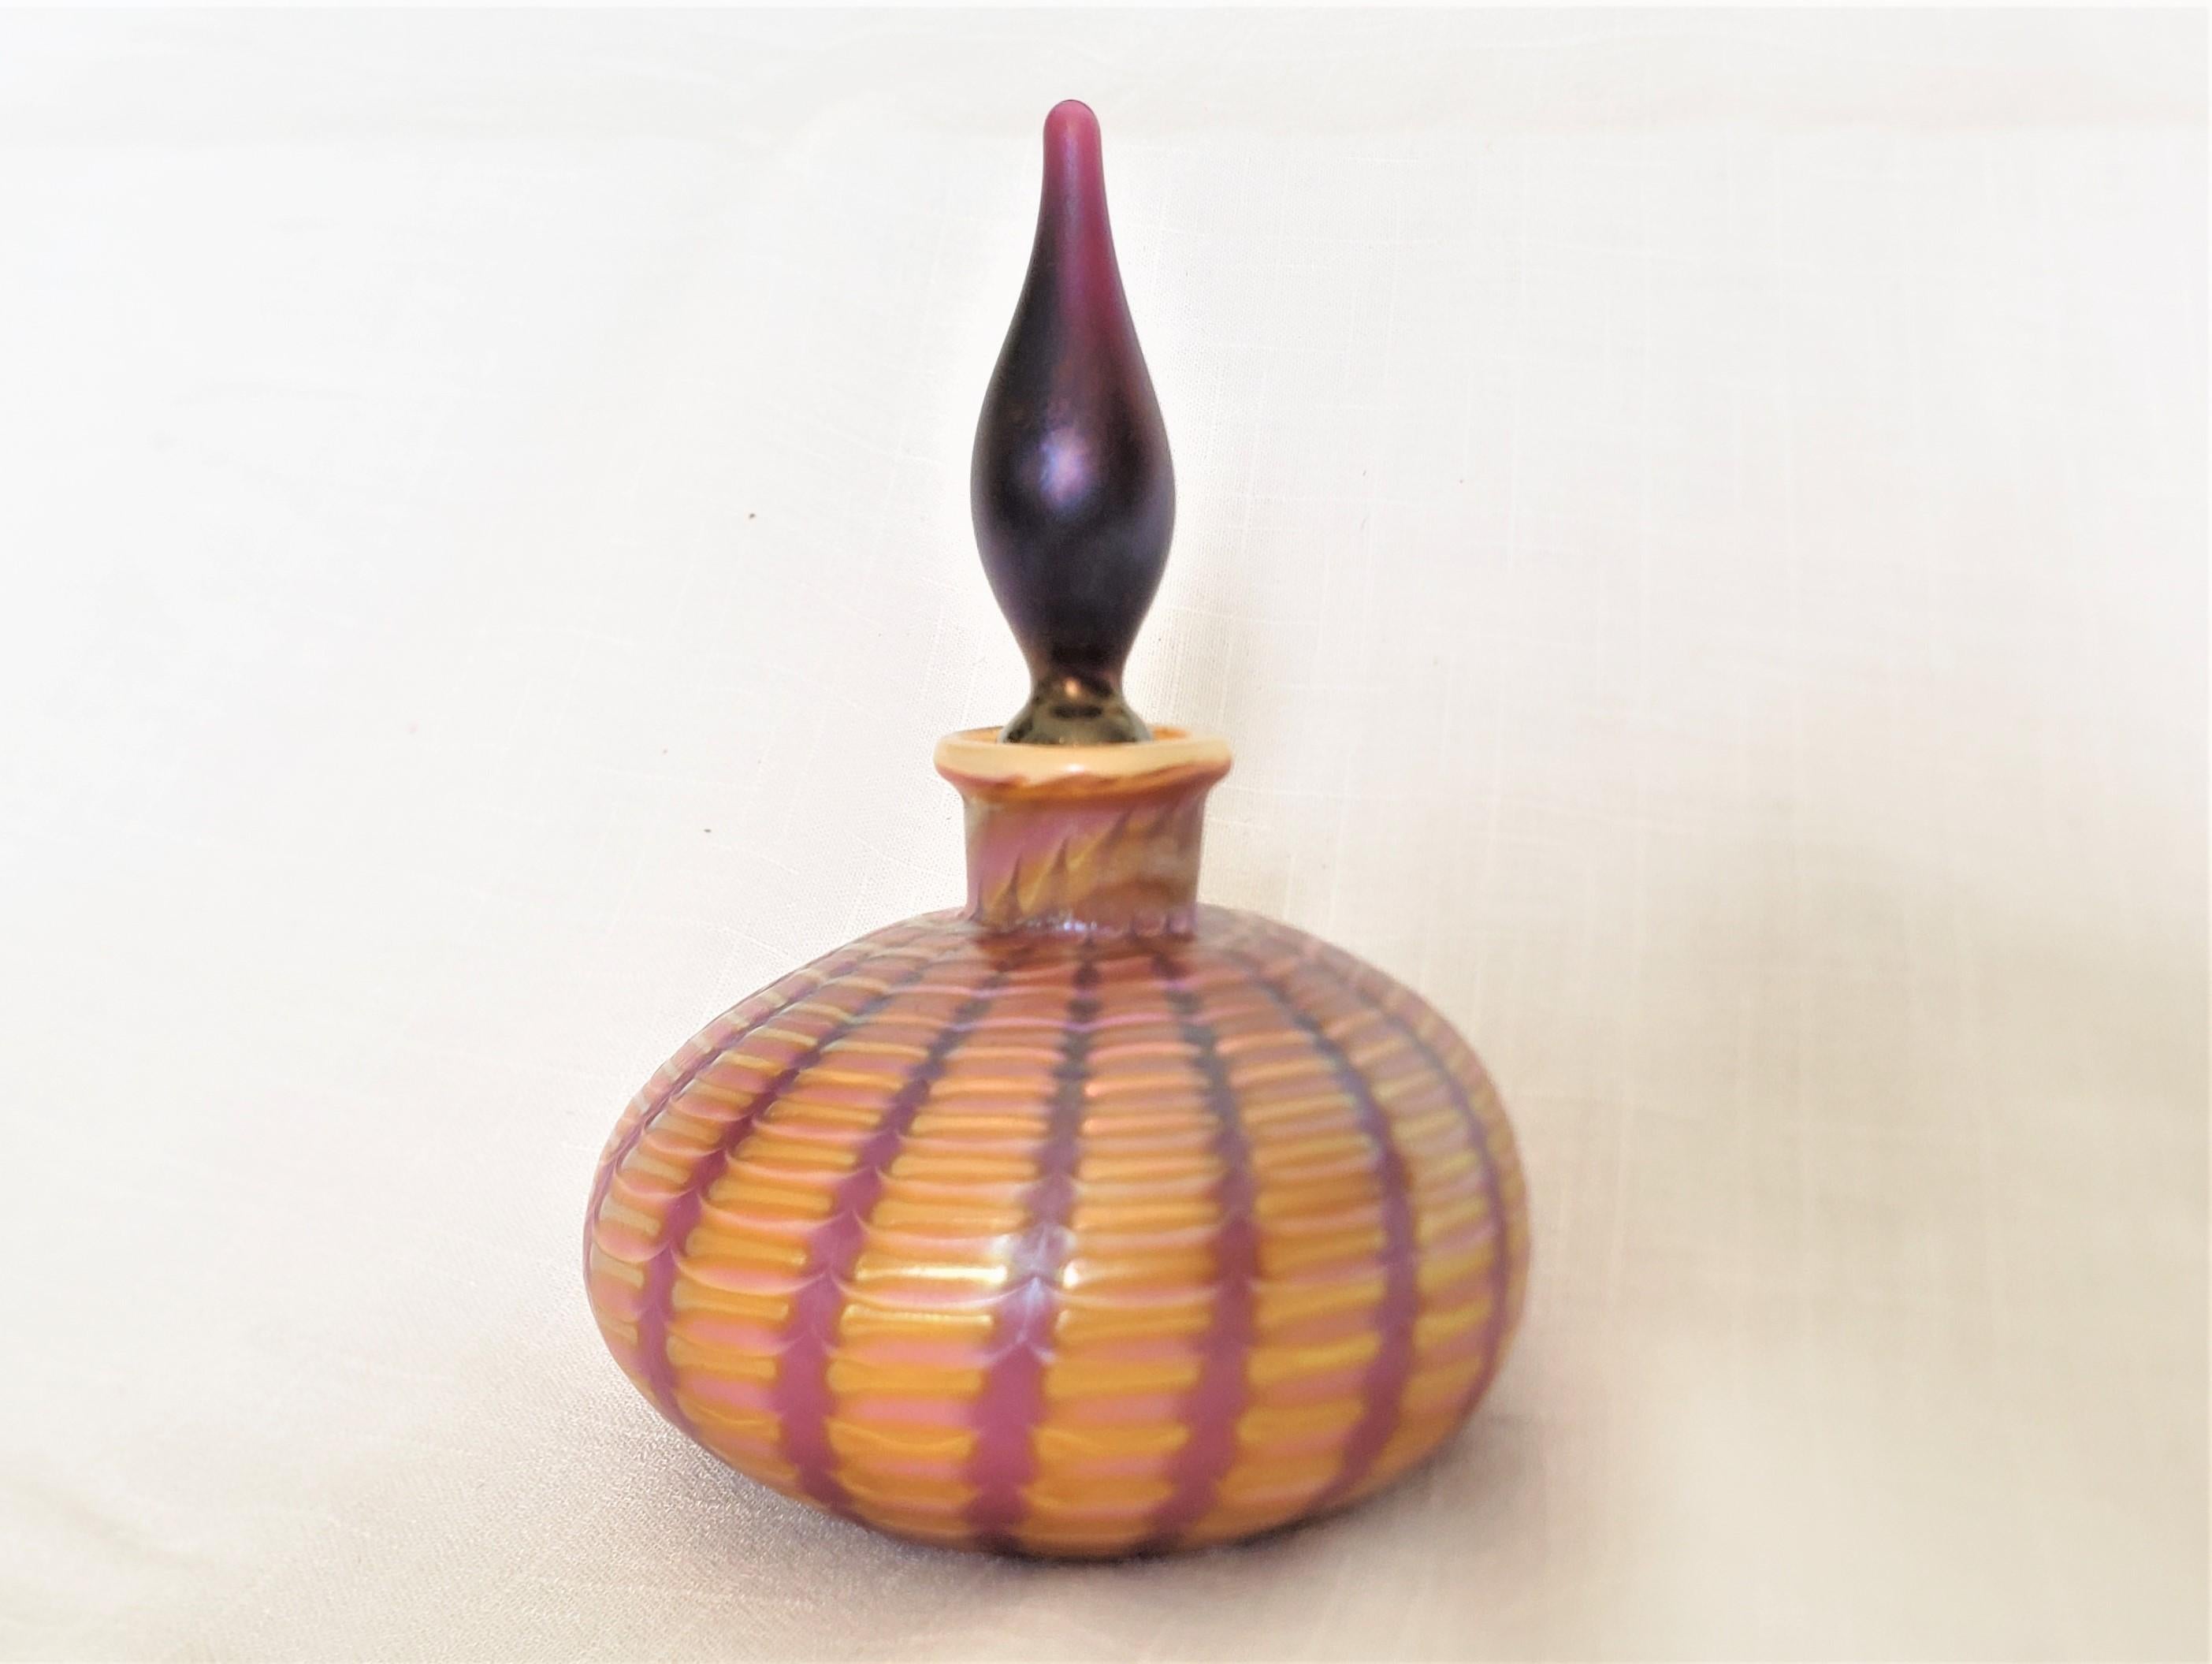 Czech Vintage Mid-Century Era Art Glass Perfume Bottle in Purple & Tangerine Orange